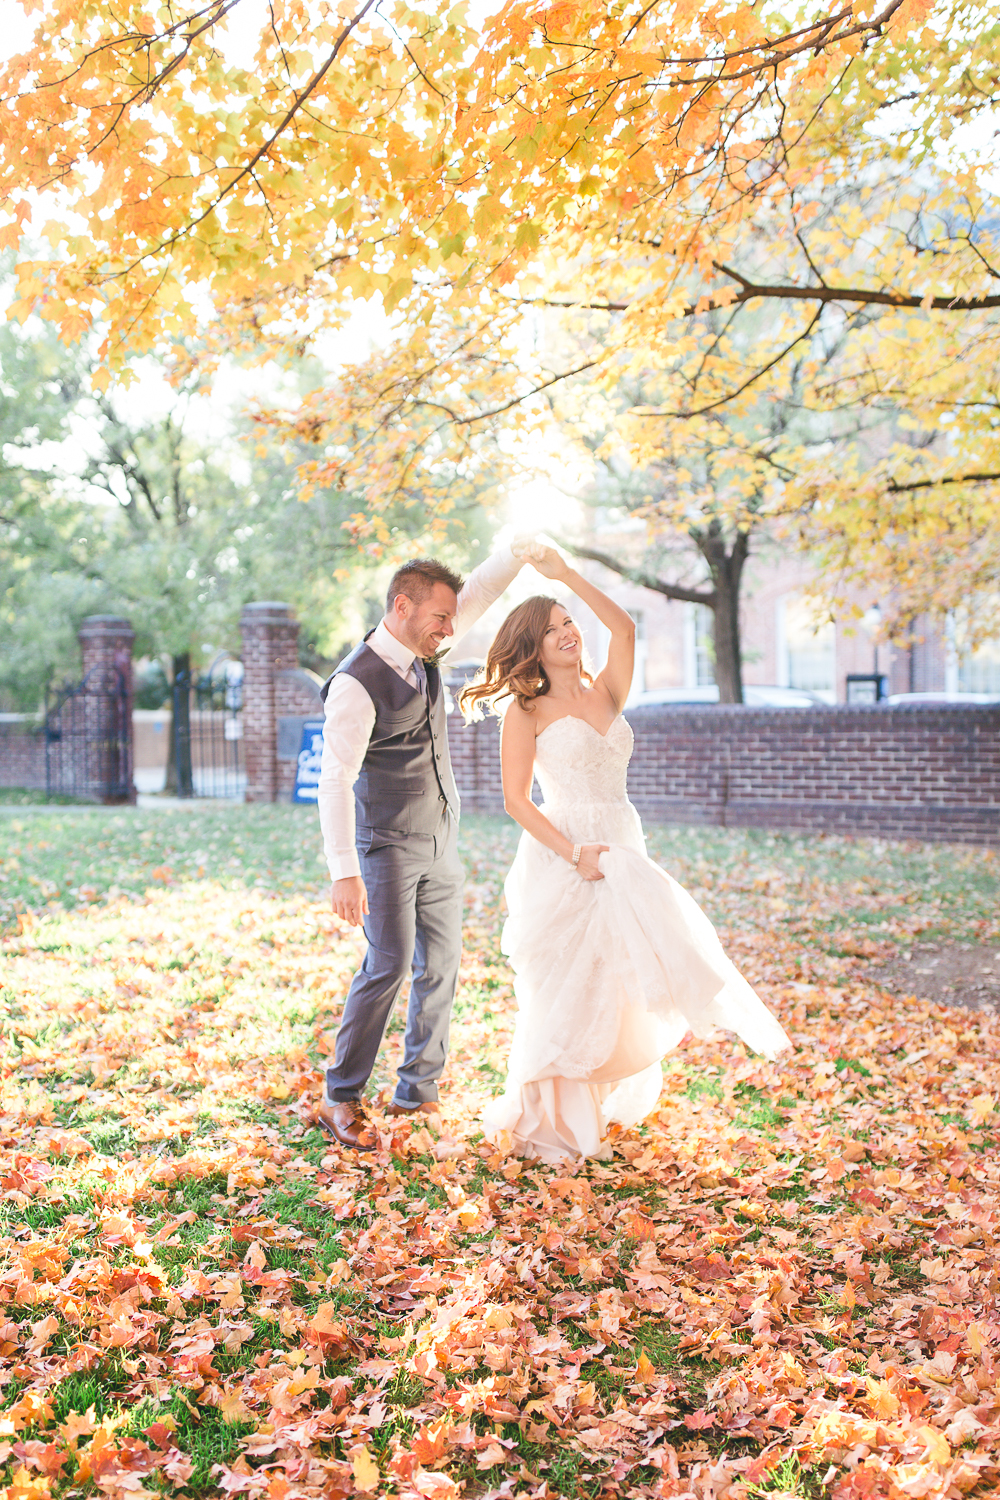 Carlyle House Elopement | Maral Noori Photography | Virginia Wedding Photographer | Fall Portraits